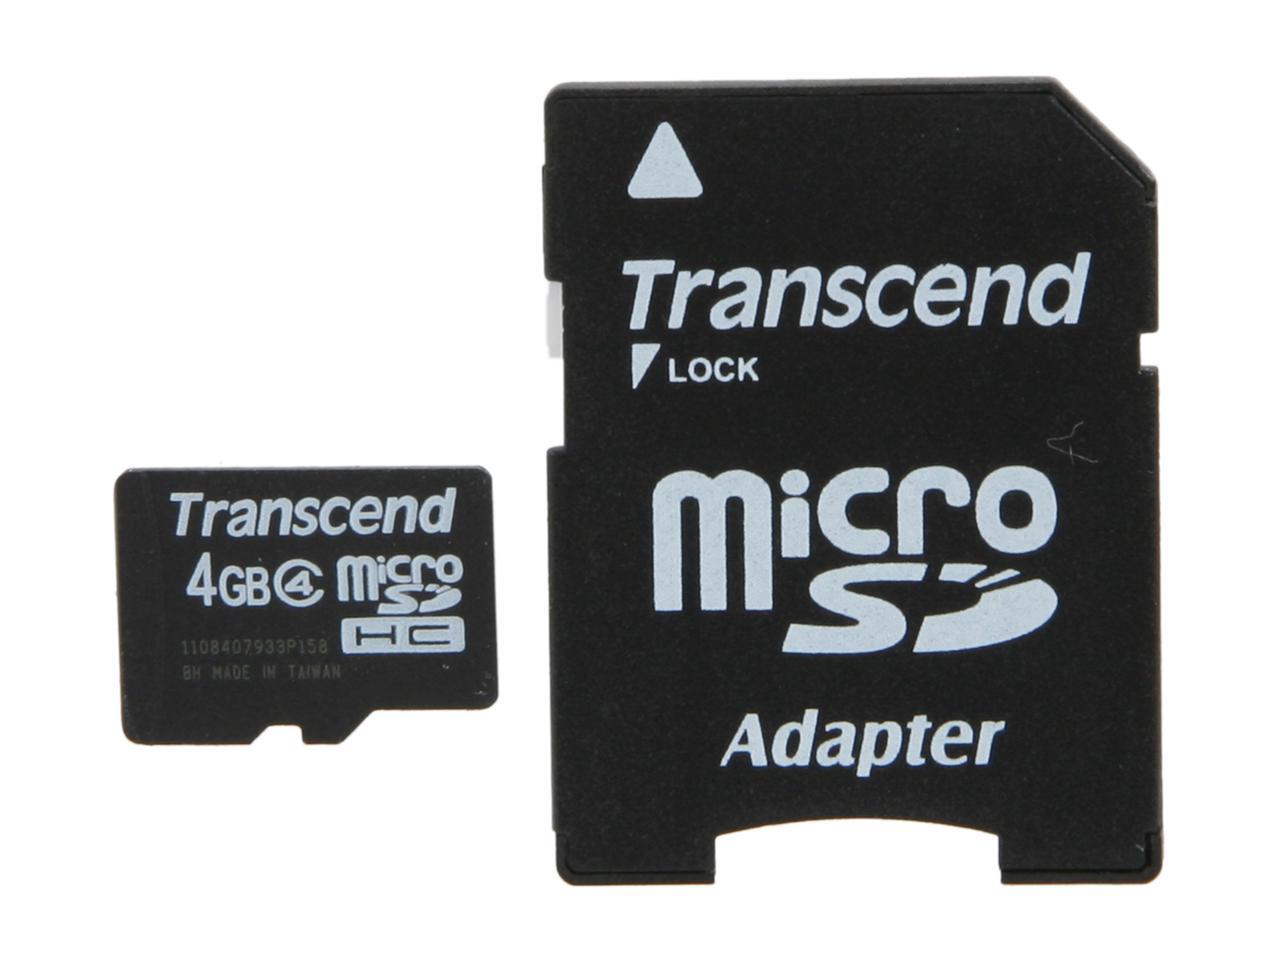 Transcend 4GB microSDHC Flash Card Adapter Model -